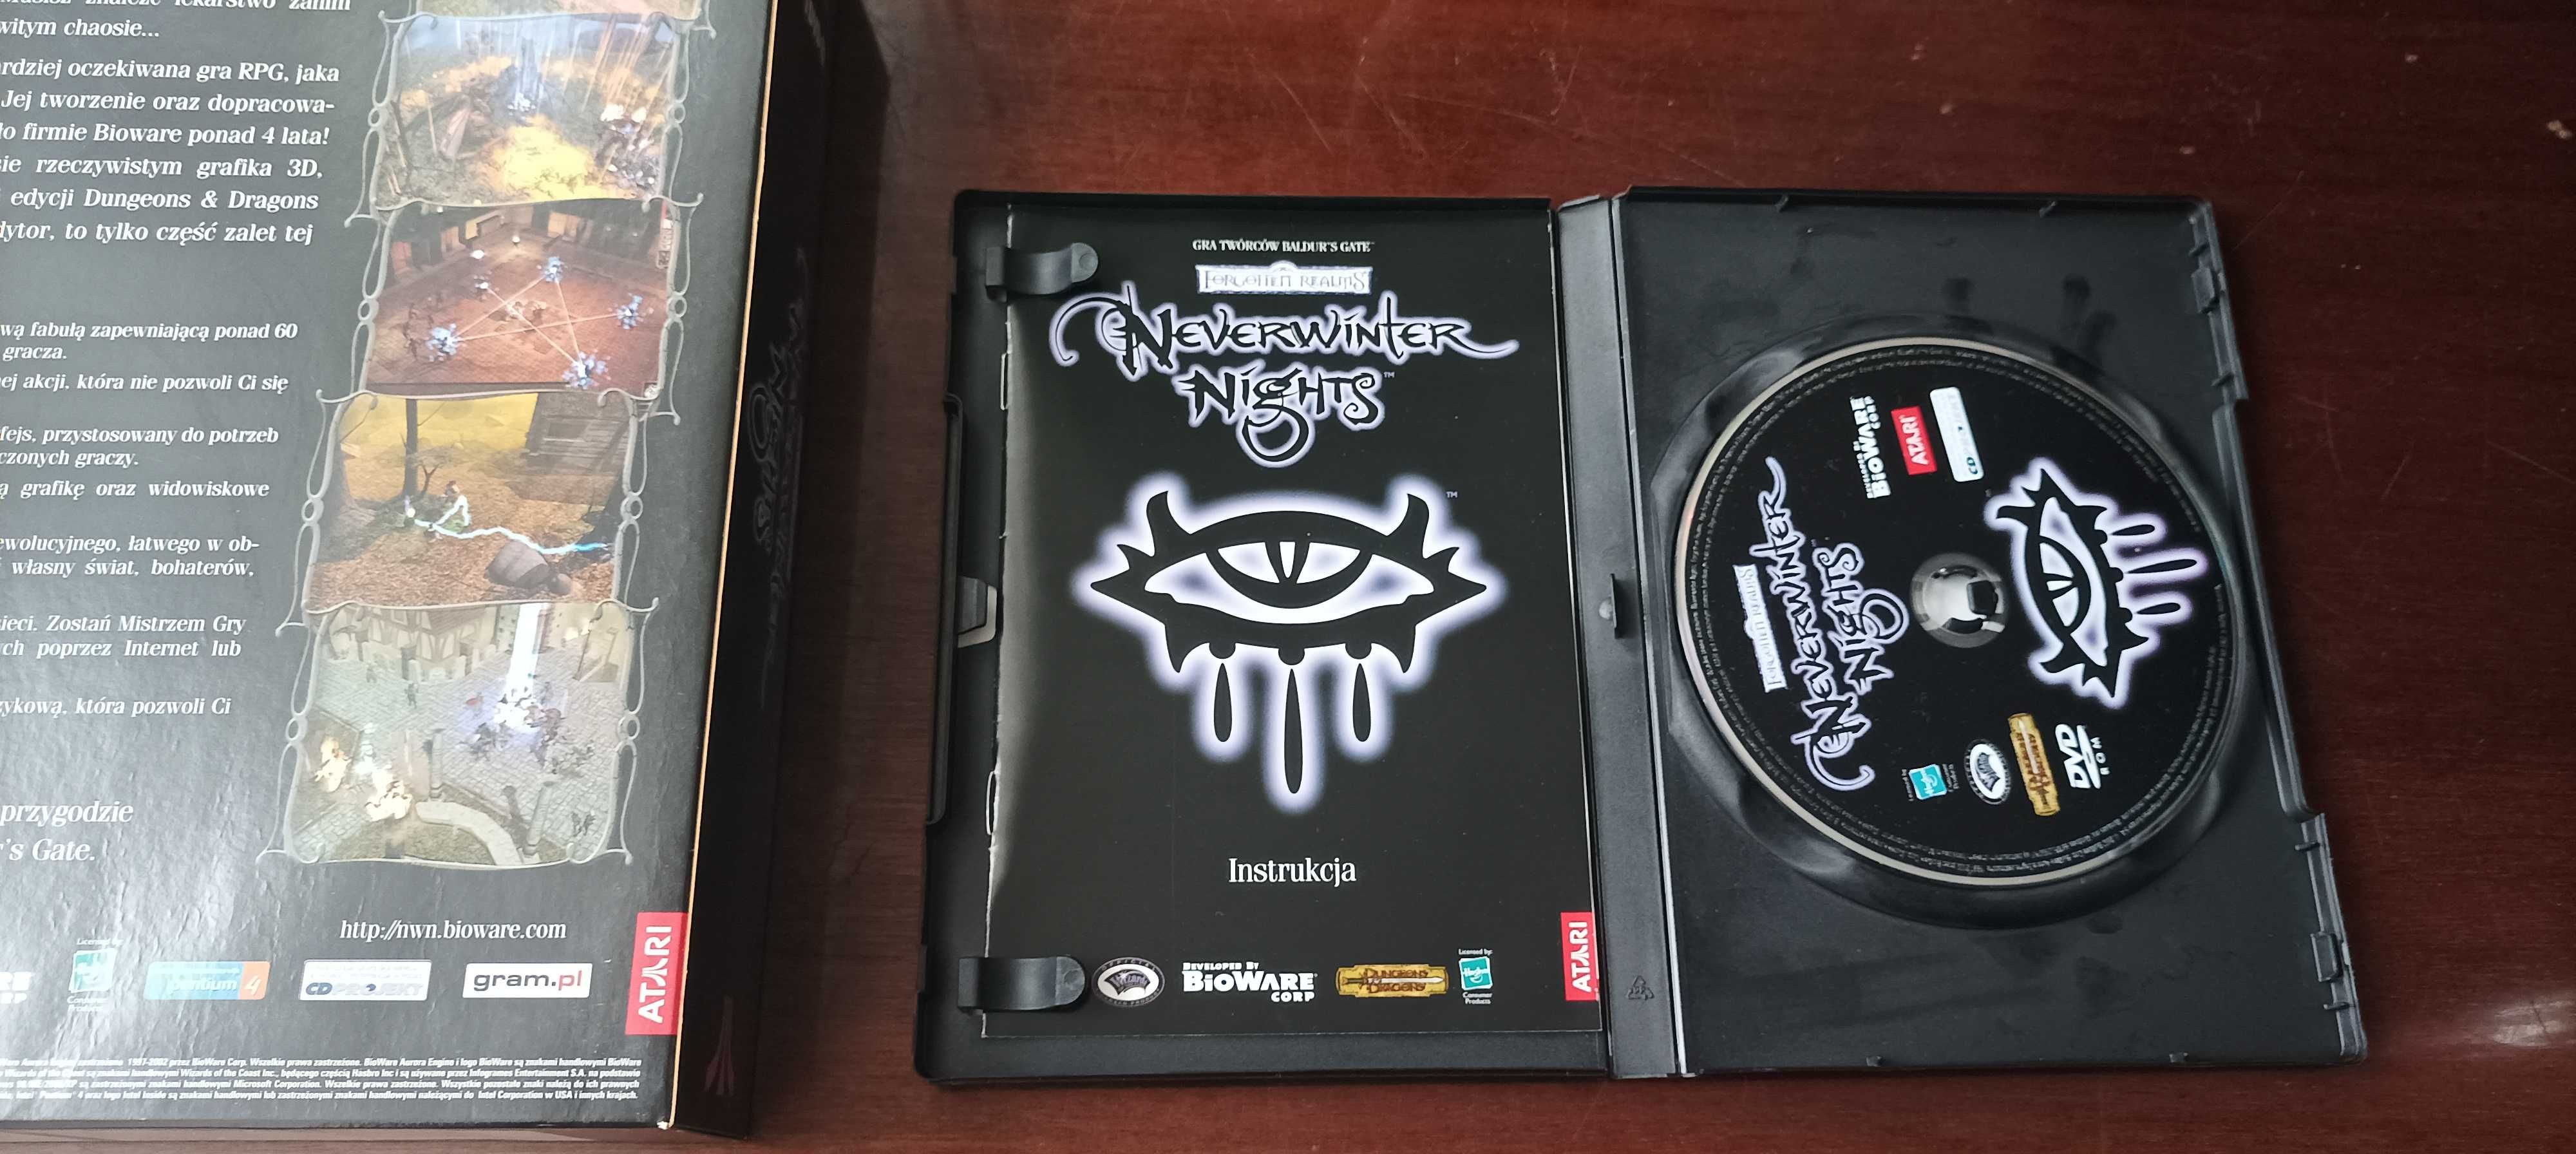 Neverwinter Nights - duży box kartonowy